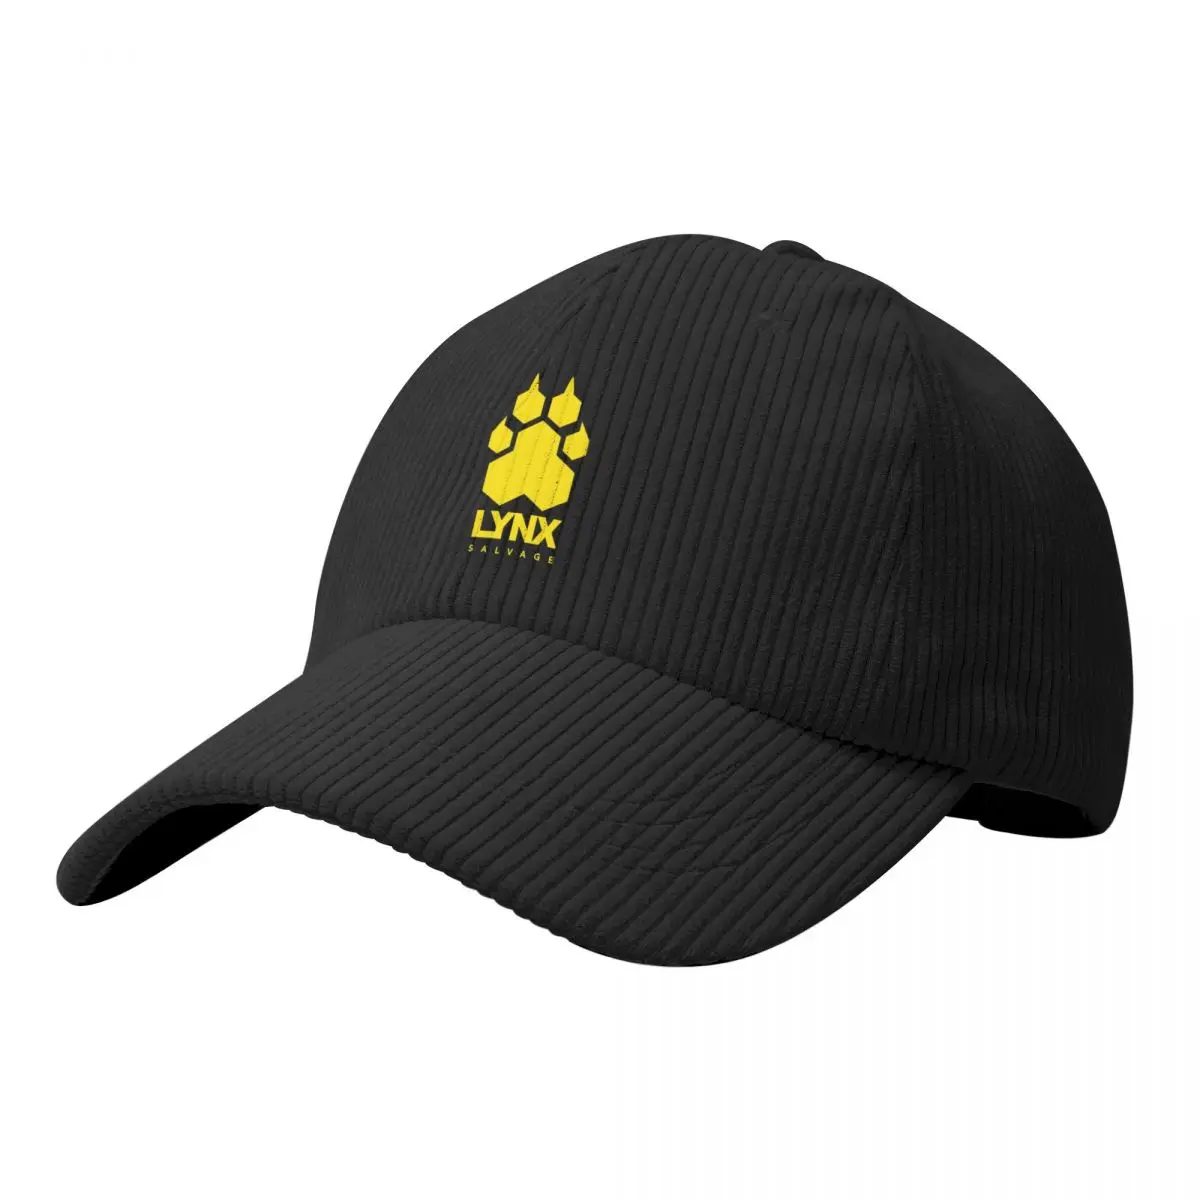 

Shipbreaker Lynx Salvage Yellow Corduroy Baseball Cap Sunhat New In Hat Women's Hats For The Sun Men's